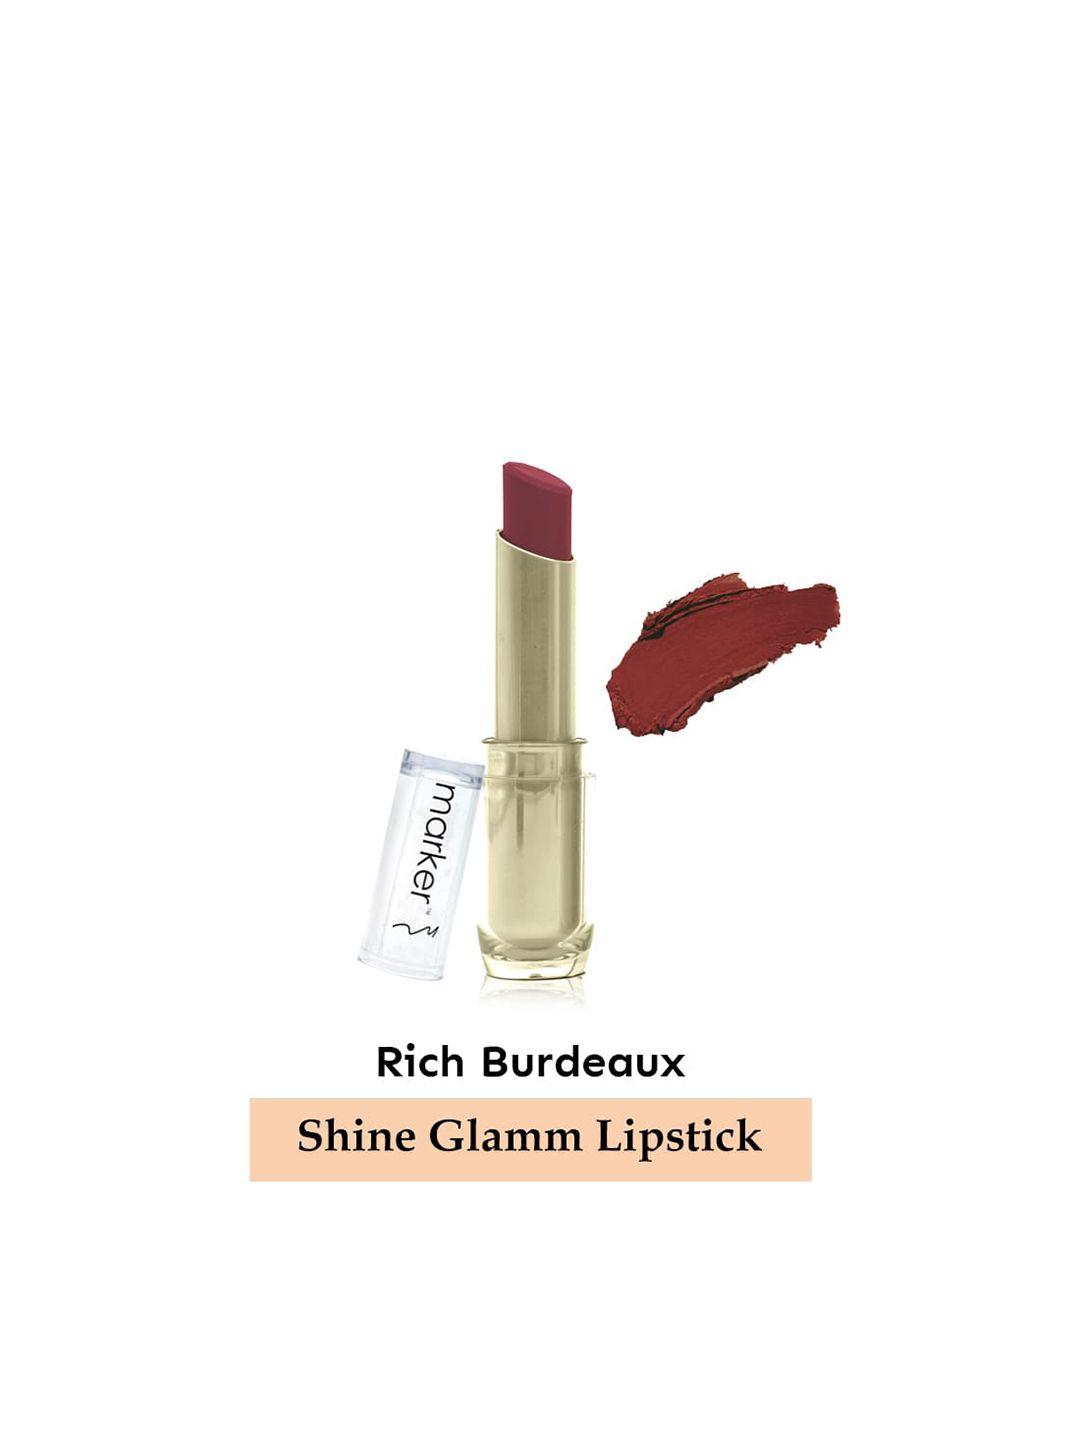 beautyrelay london marker shine glamm lipstick 3.5g- rich burdeaux